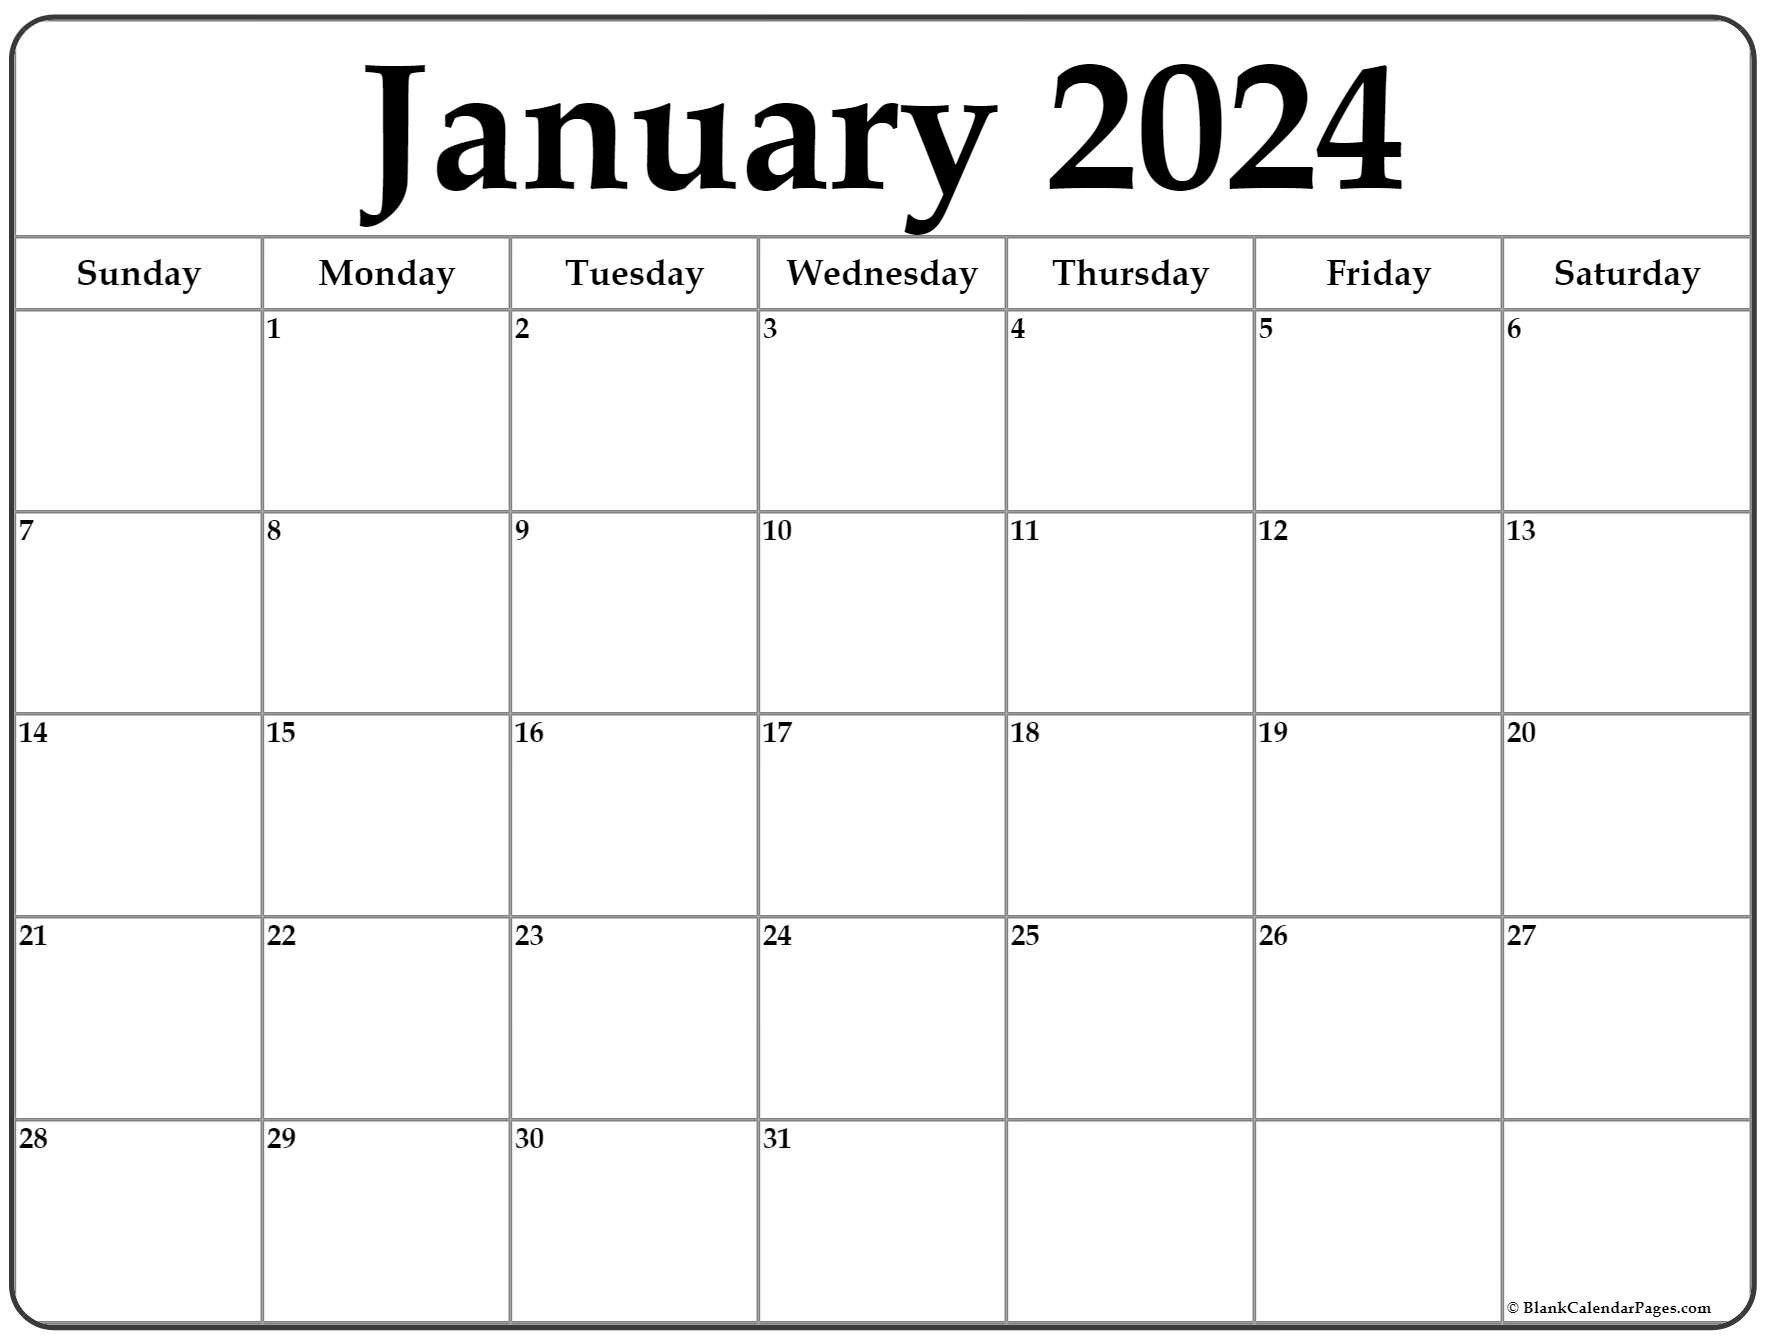 January 2024 Calendar | Free Printable Calendar inside Free Printable Calendar 2024 Canada Monthly